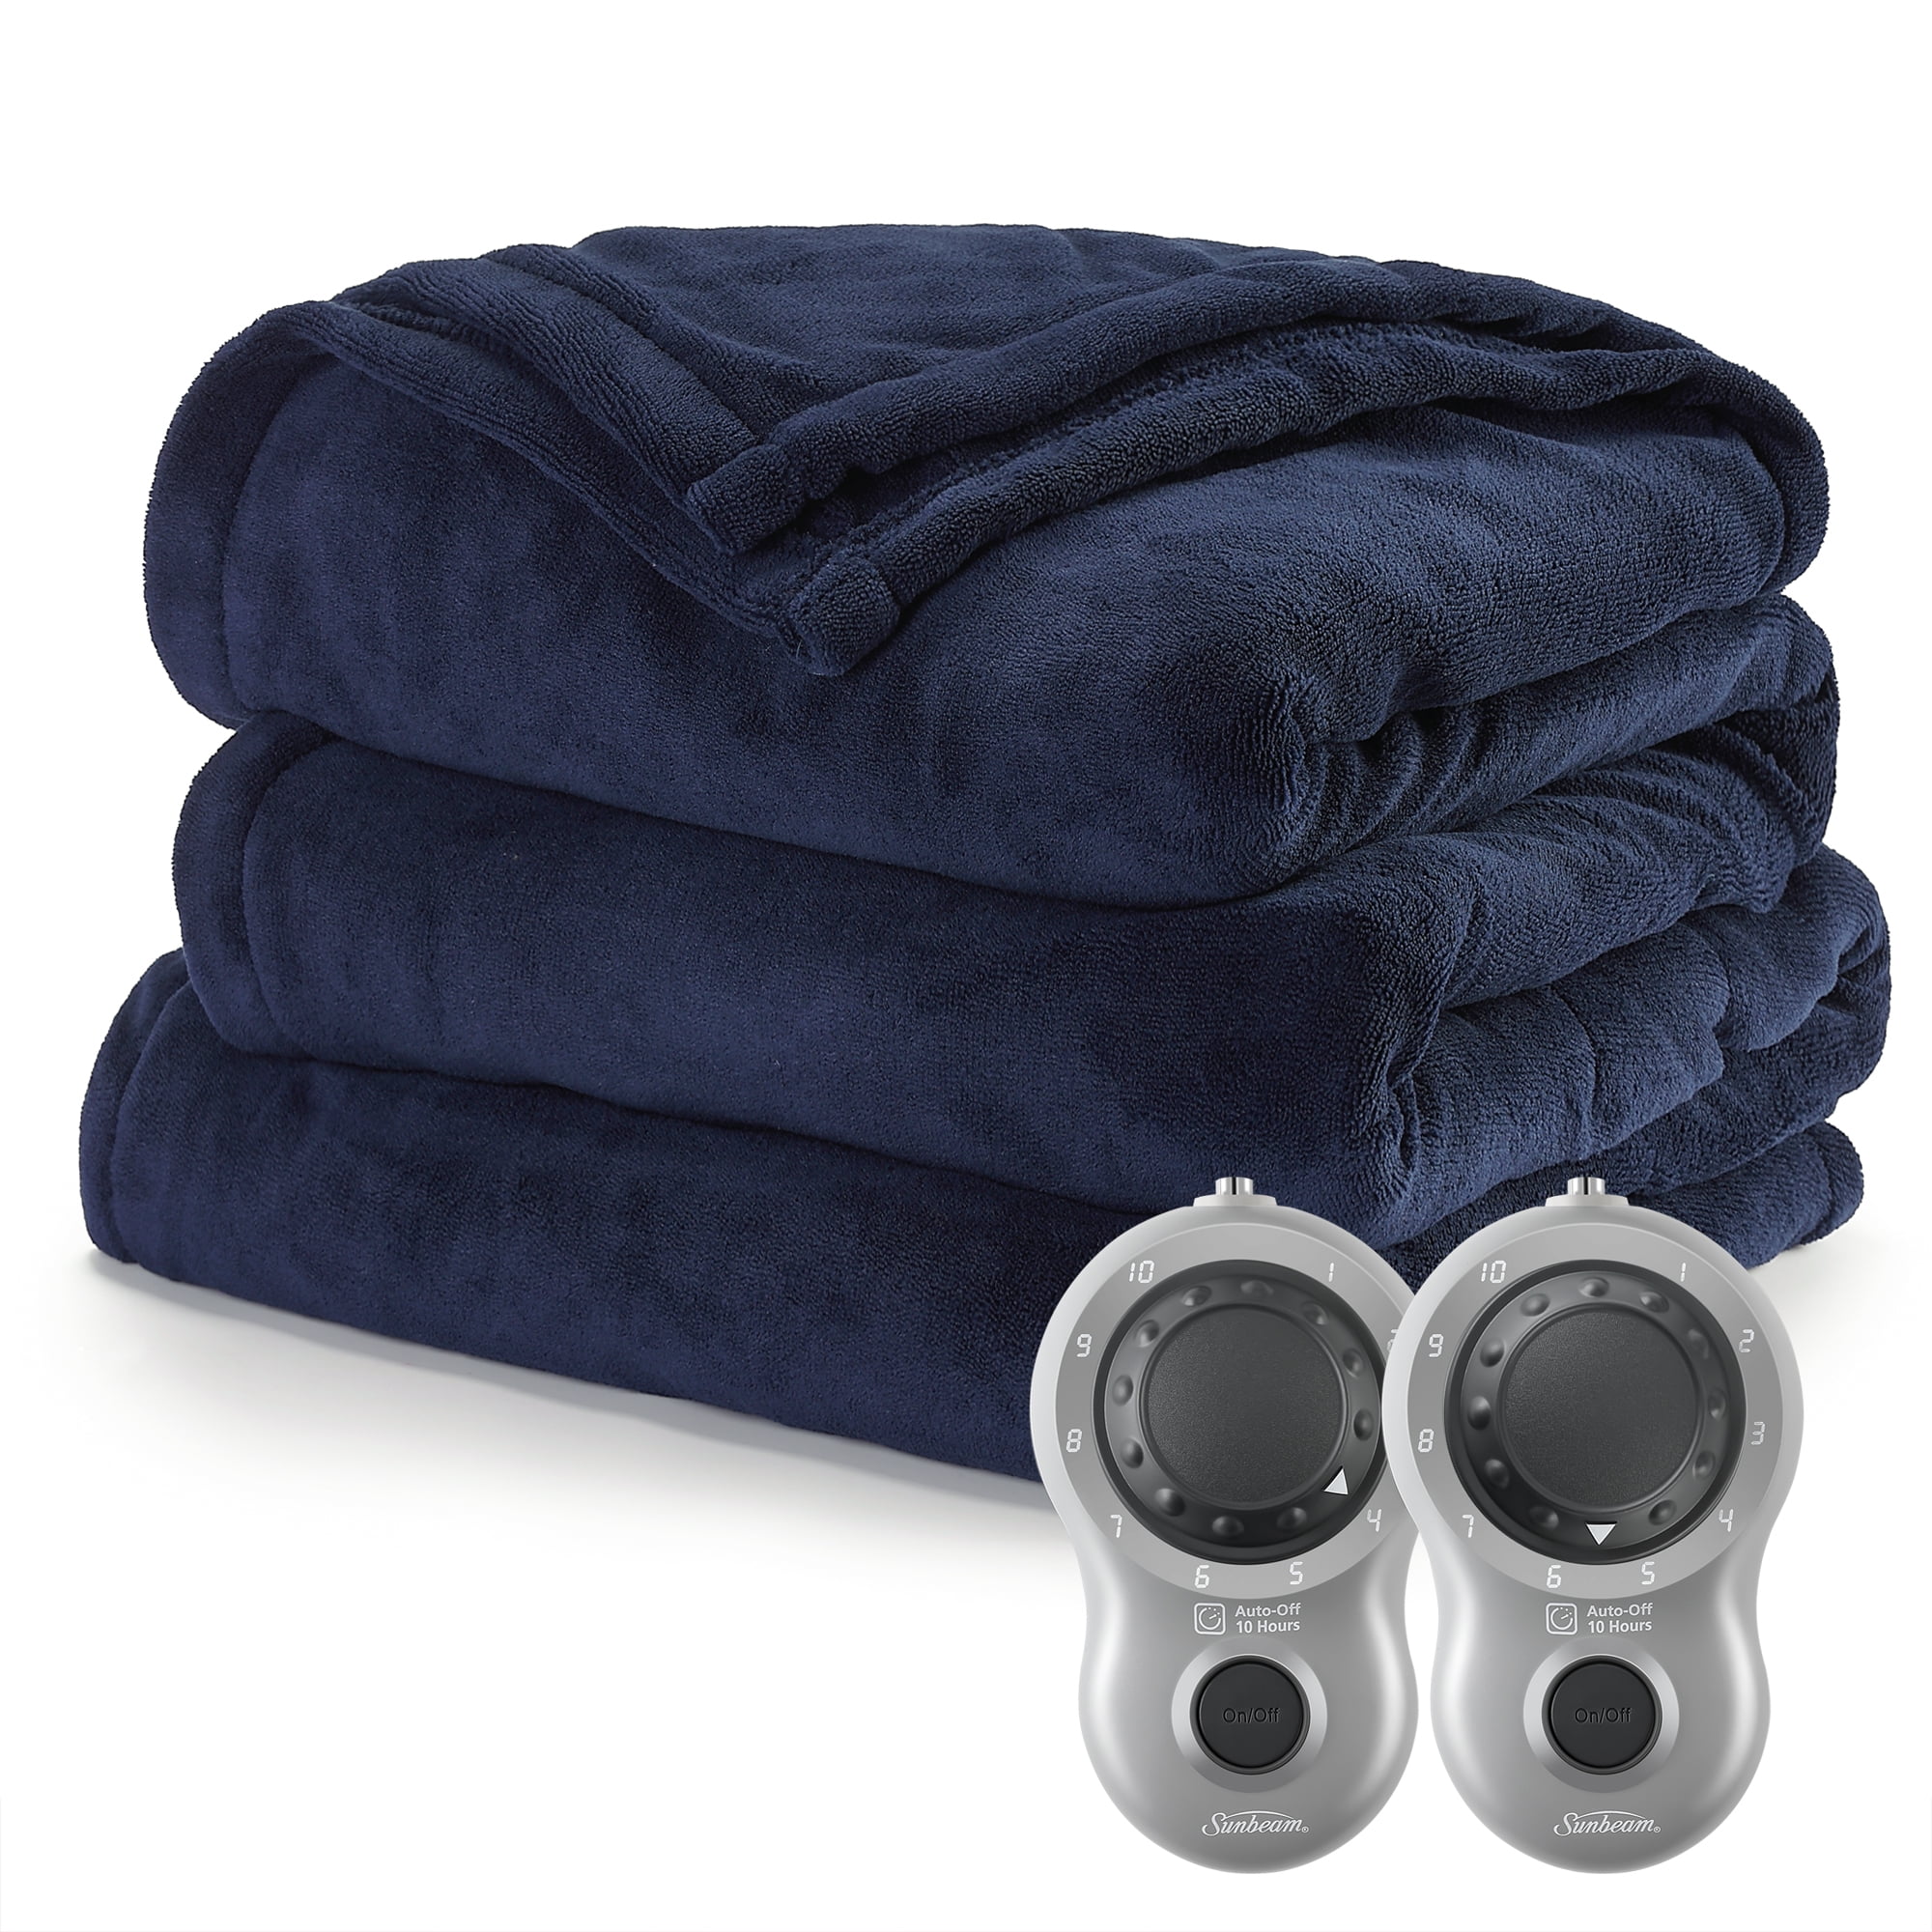 Sunbeam Heated Electric Blanket, Bedding, King, Microplush, Poseidon Blue